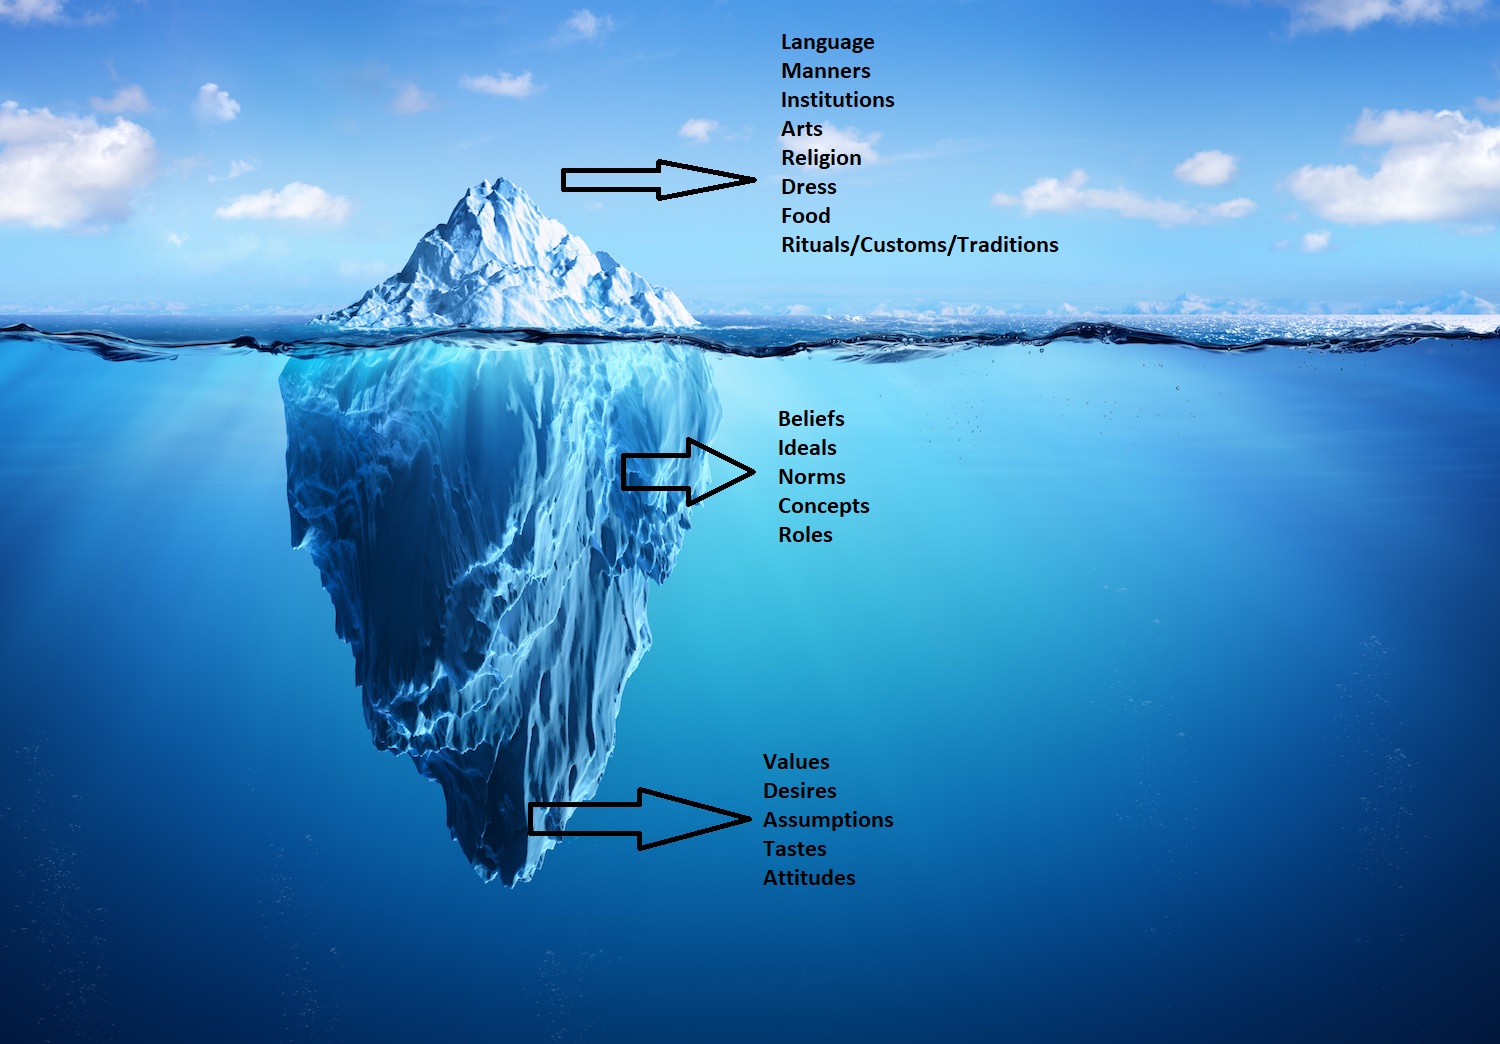 the cultural iceberg